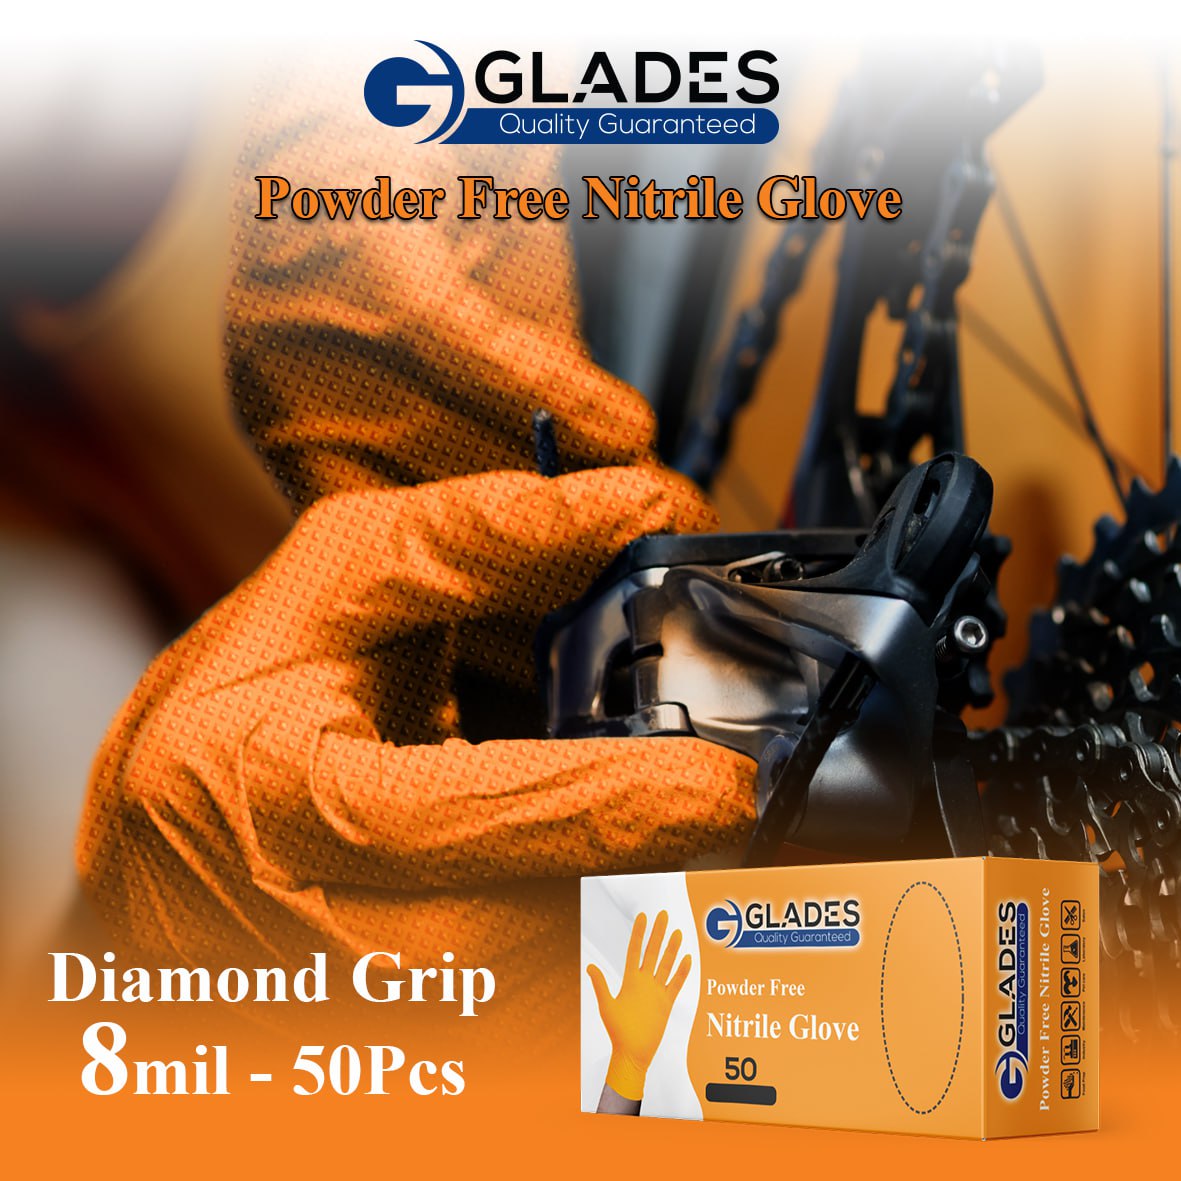 GLADES HEAVY DUTY ORANGE INDUSTRIAL NITRILE GLOVES 8 MIL DIAMOND GRIP POWDER FREE